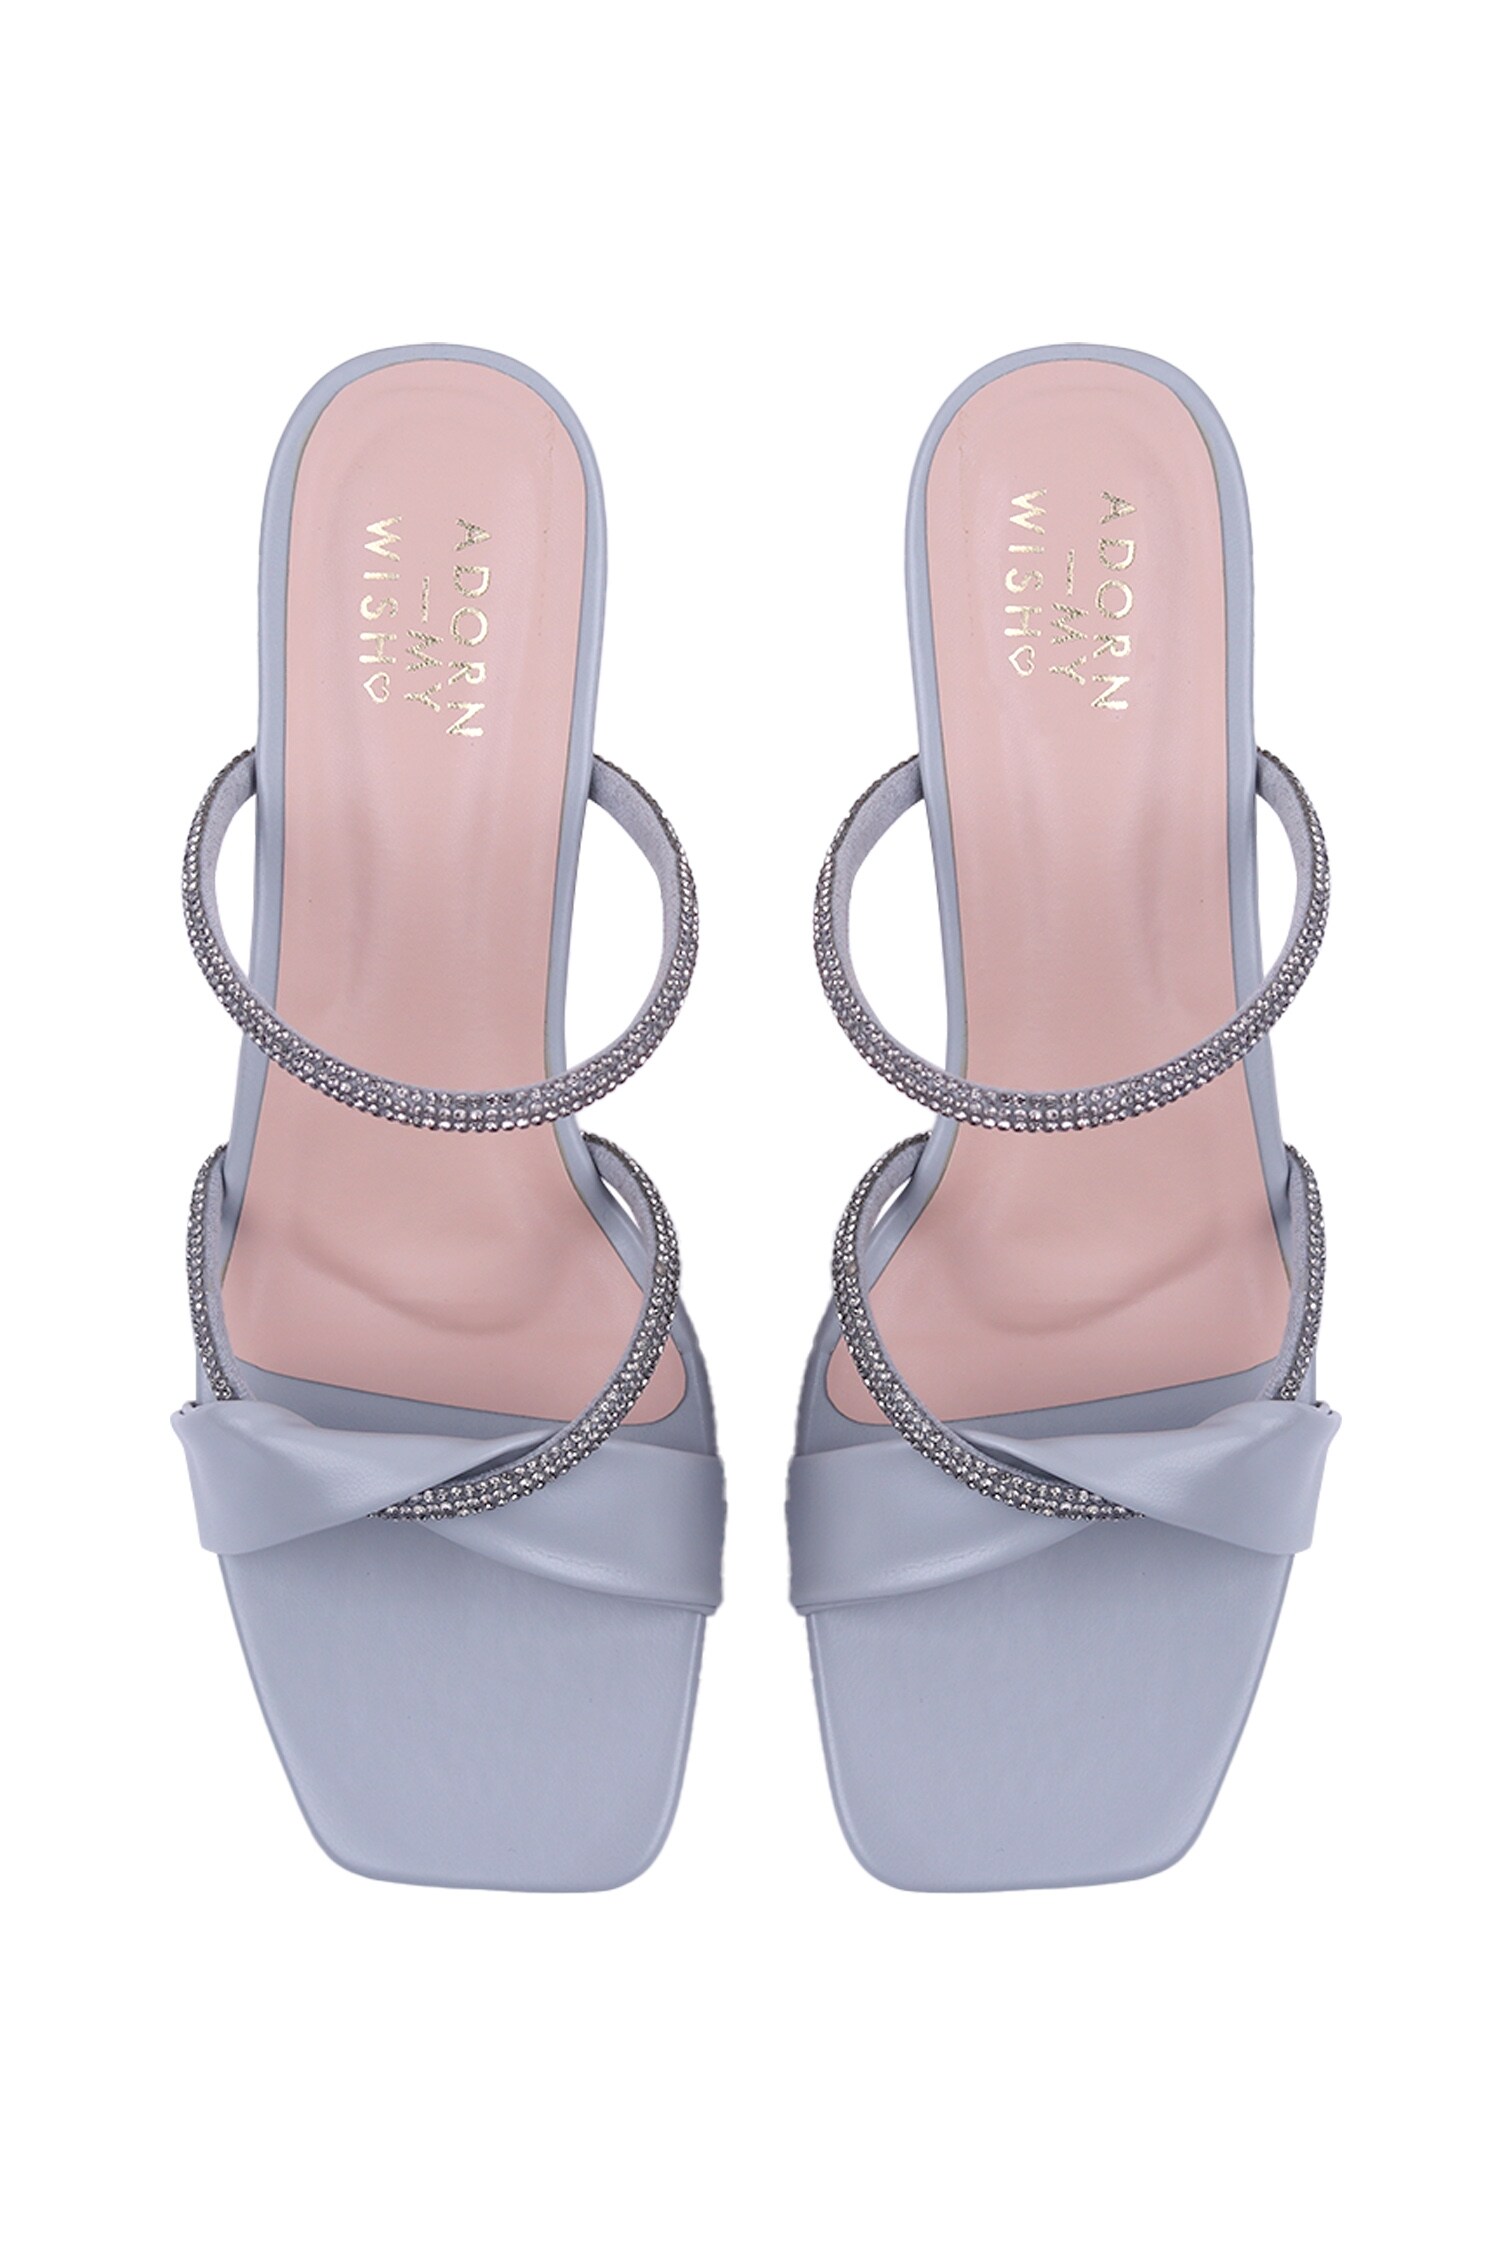 Adorn My Wish - Grey Embellished Strappy Transparent Block Heels